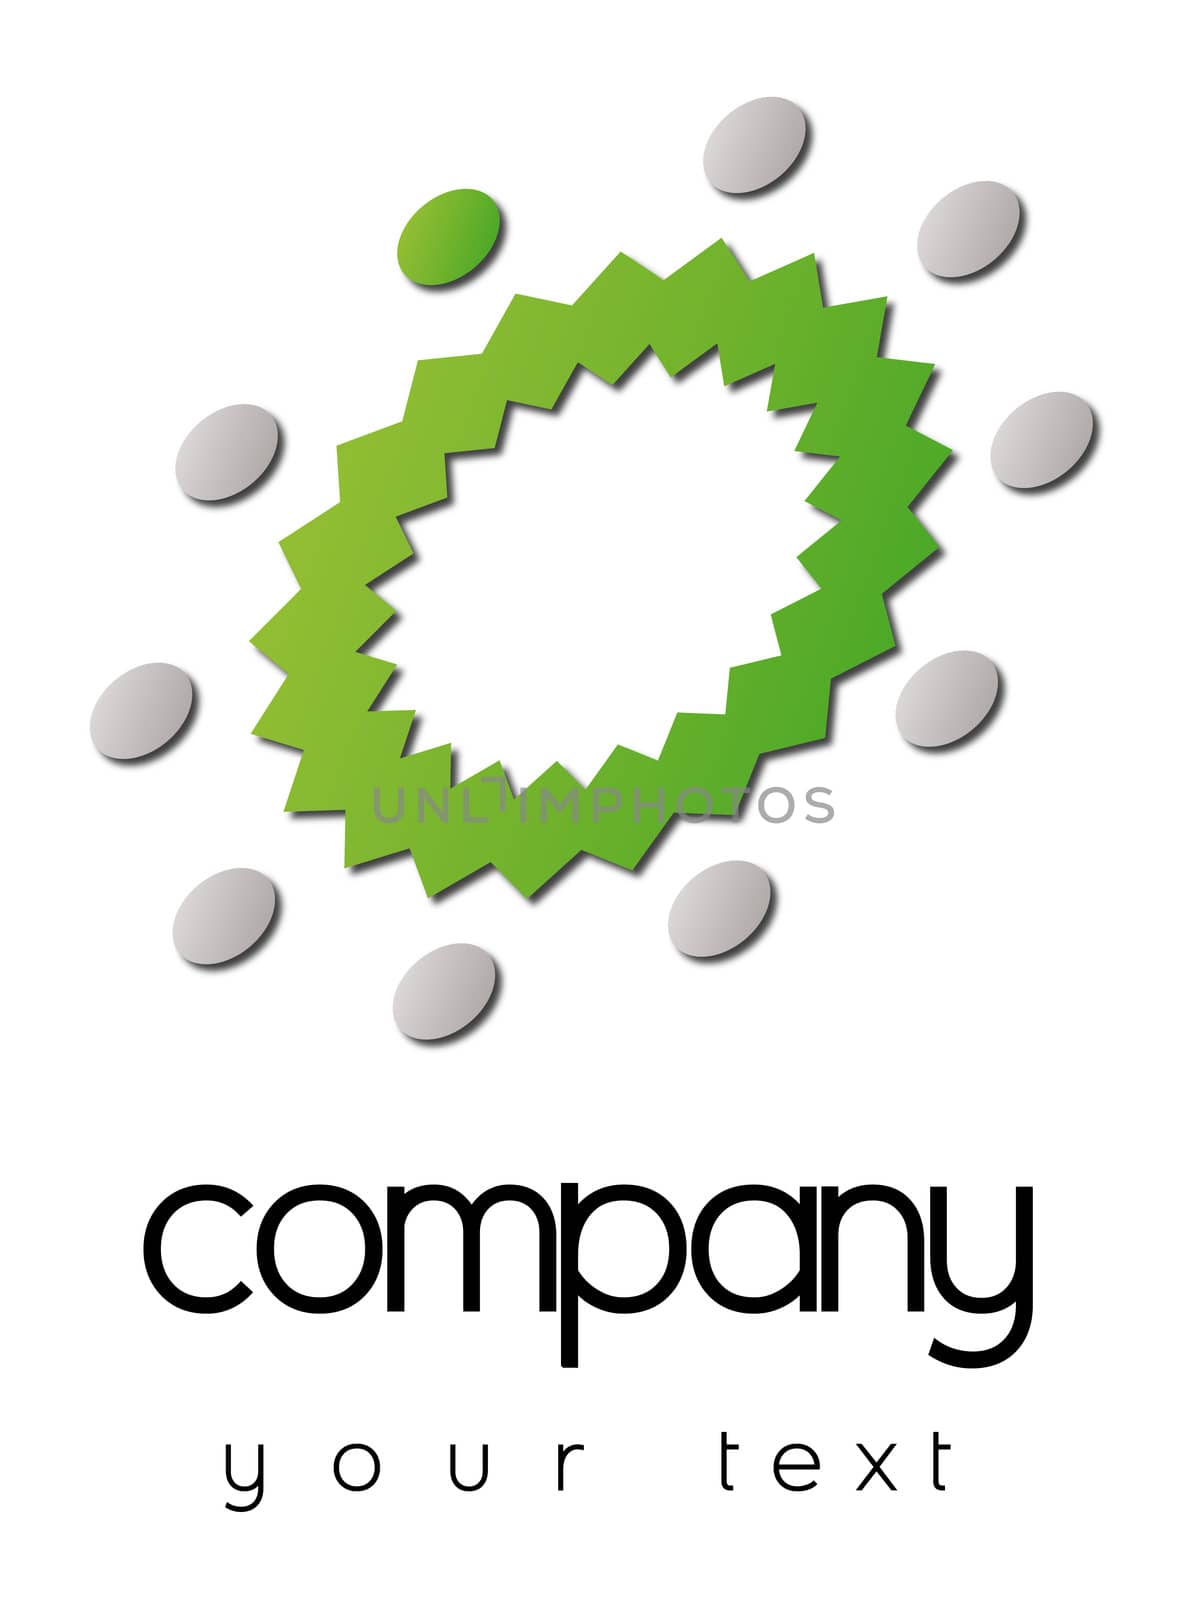 Business logo by landon